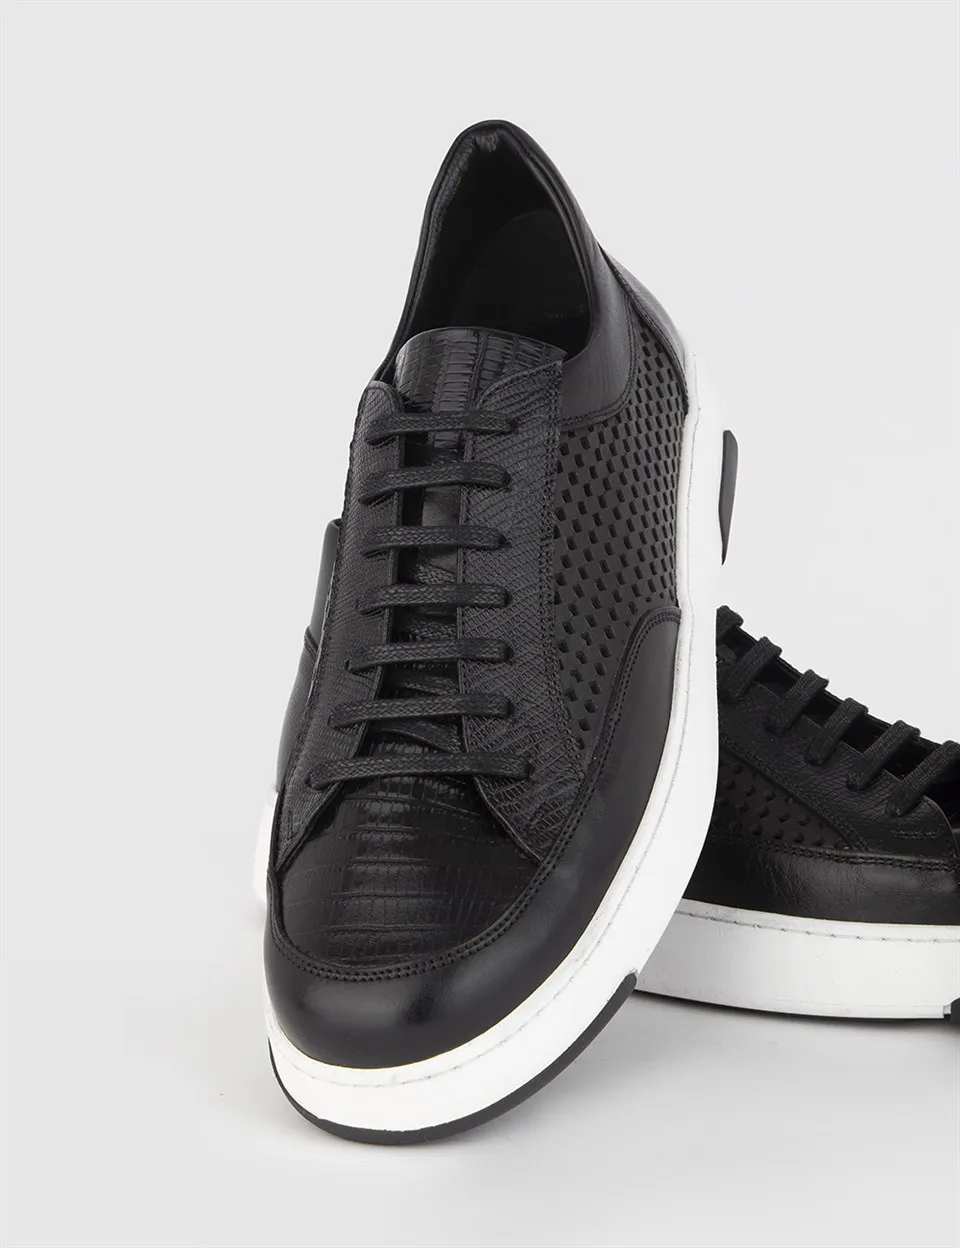 

ILVi-Genuine Leather Handmade Brina Black Leather Men's Sneaker Men Shoes 2022 Spring/Summer